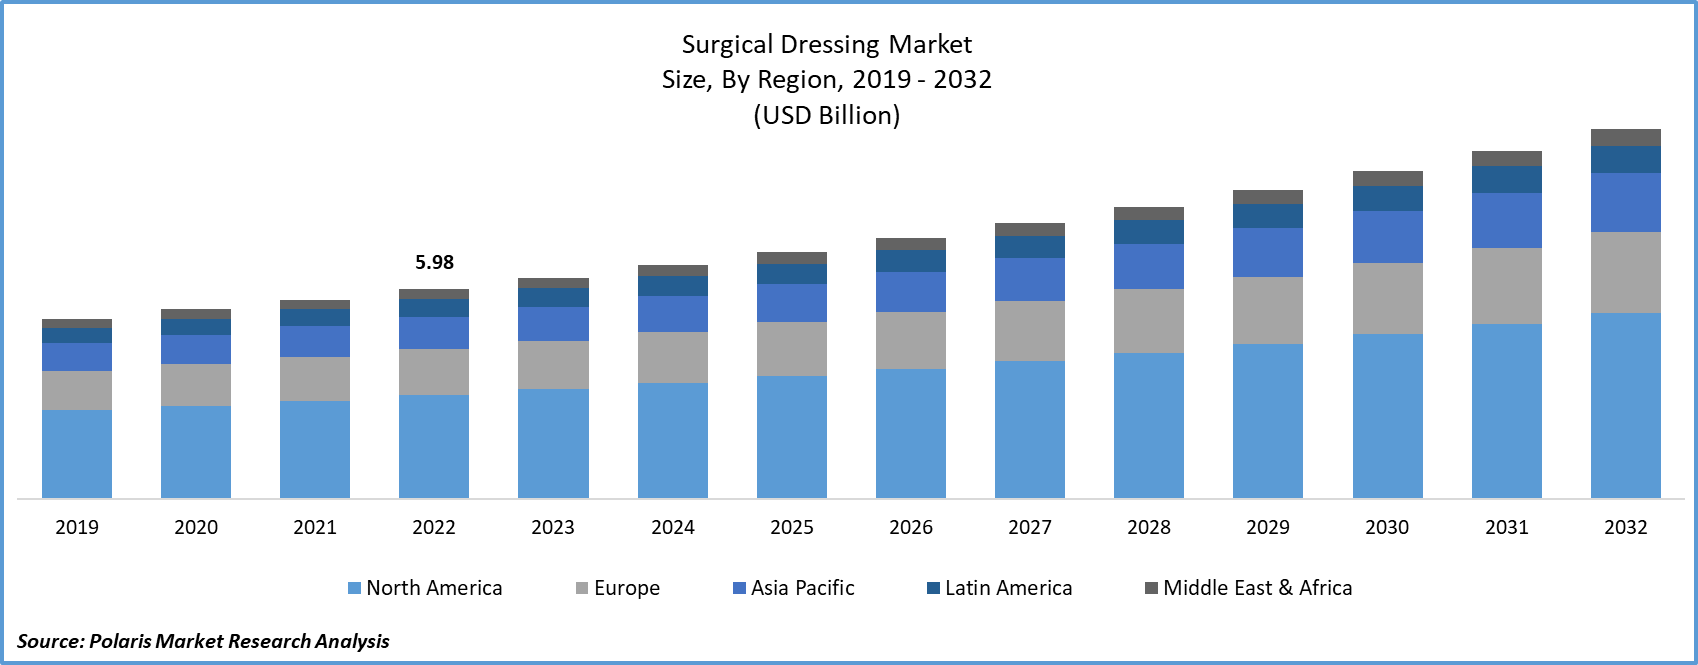 Surgical Dressing Market Size